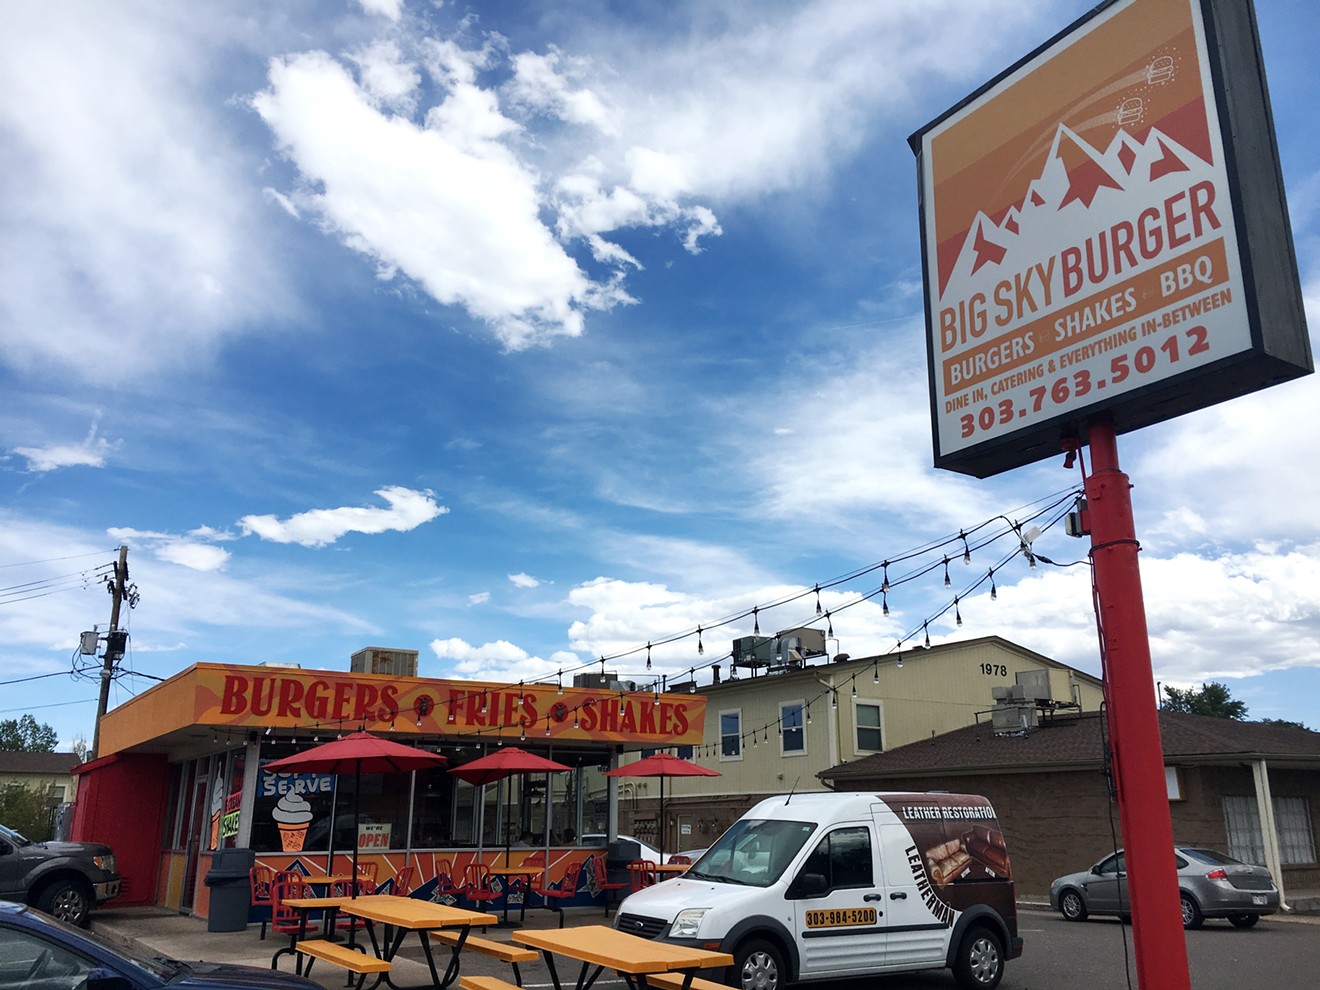 Big Sky Burger adds a neighborhood hamburger shack to Lakewood.